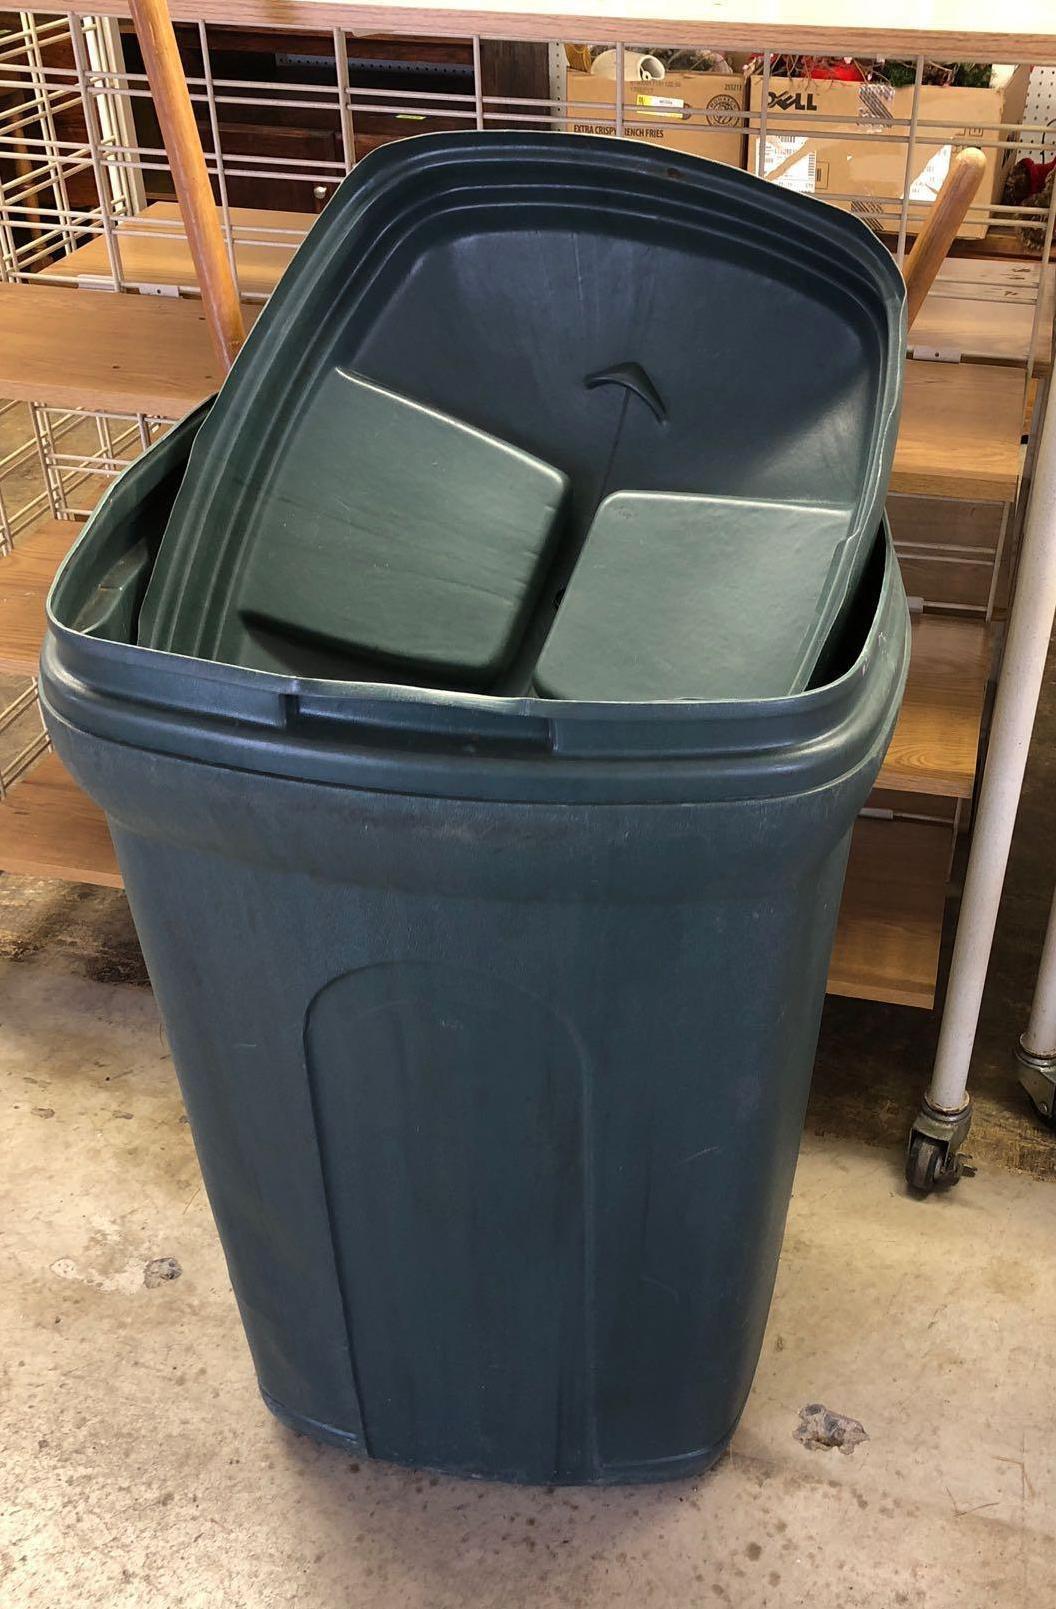 Plastic garbage can,trash can,laundry basket,hoe, cultivator,pruner,hedge trimmer